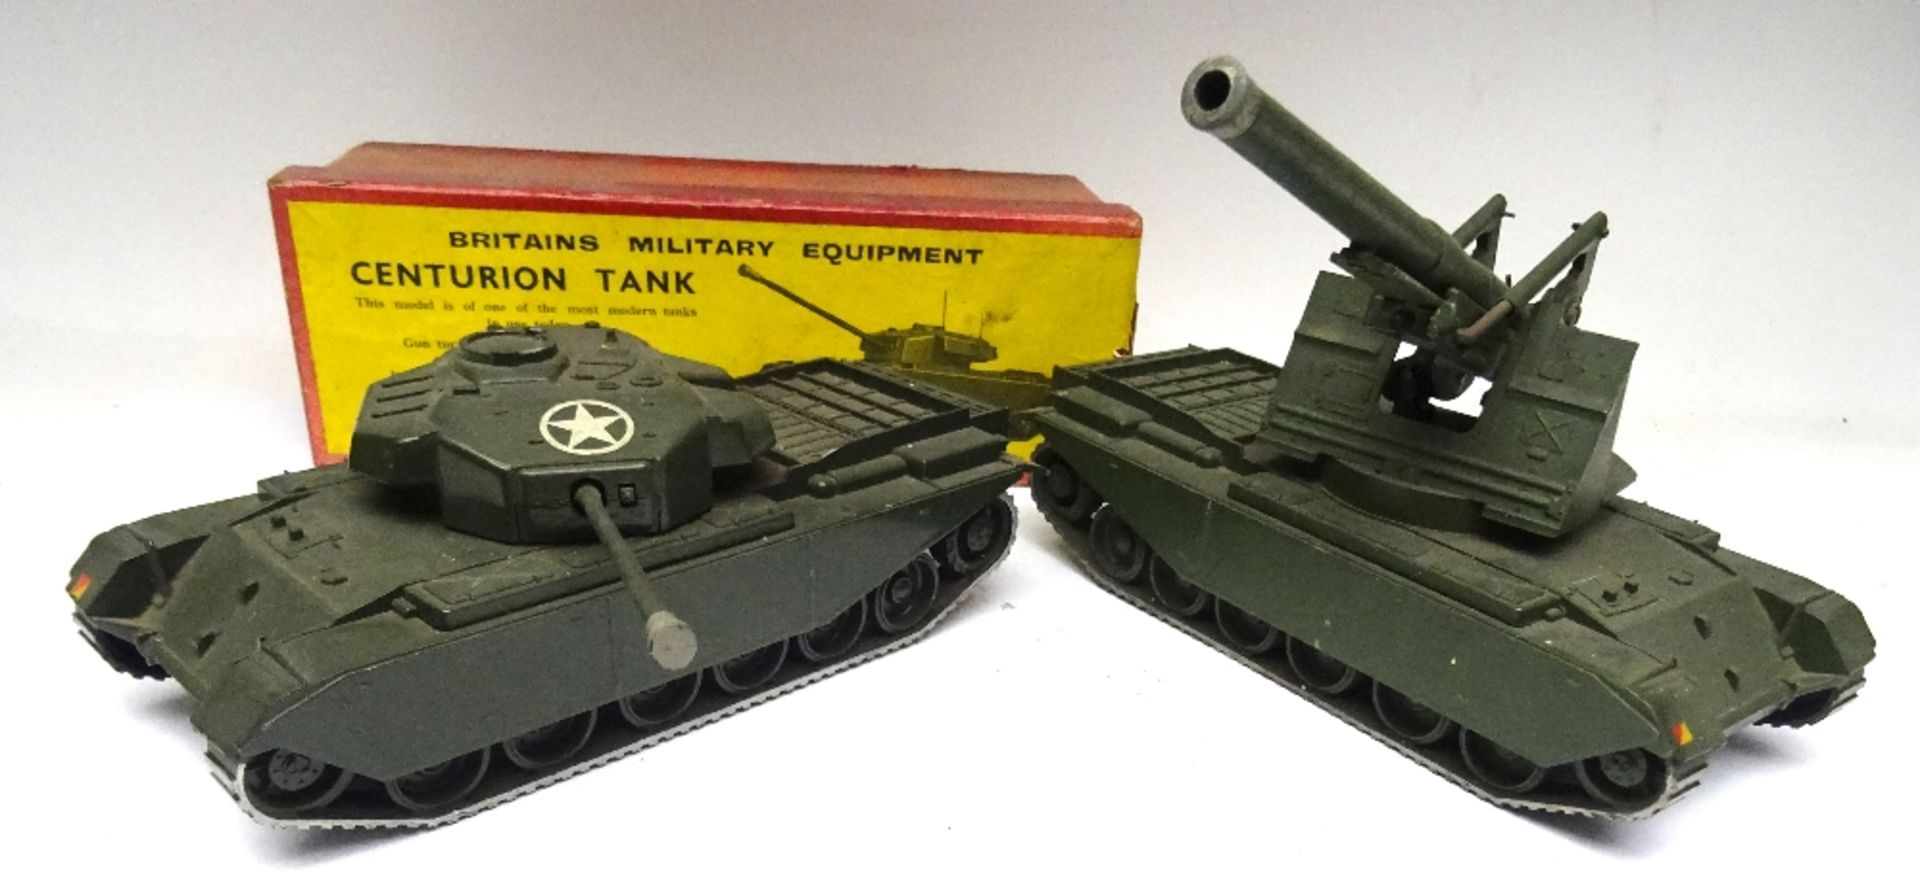 Britains set 2150 Centurion Tank - Image 4 of 9